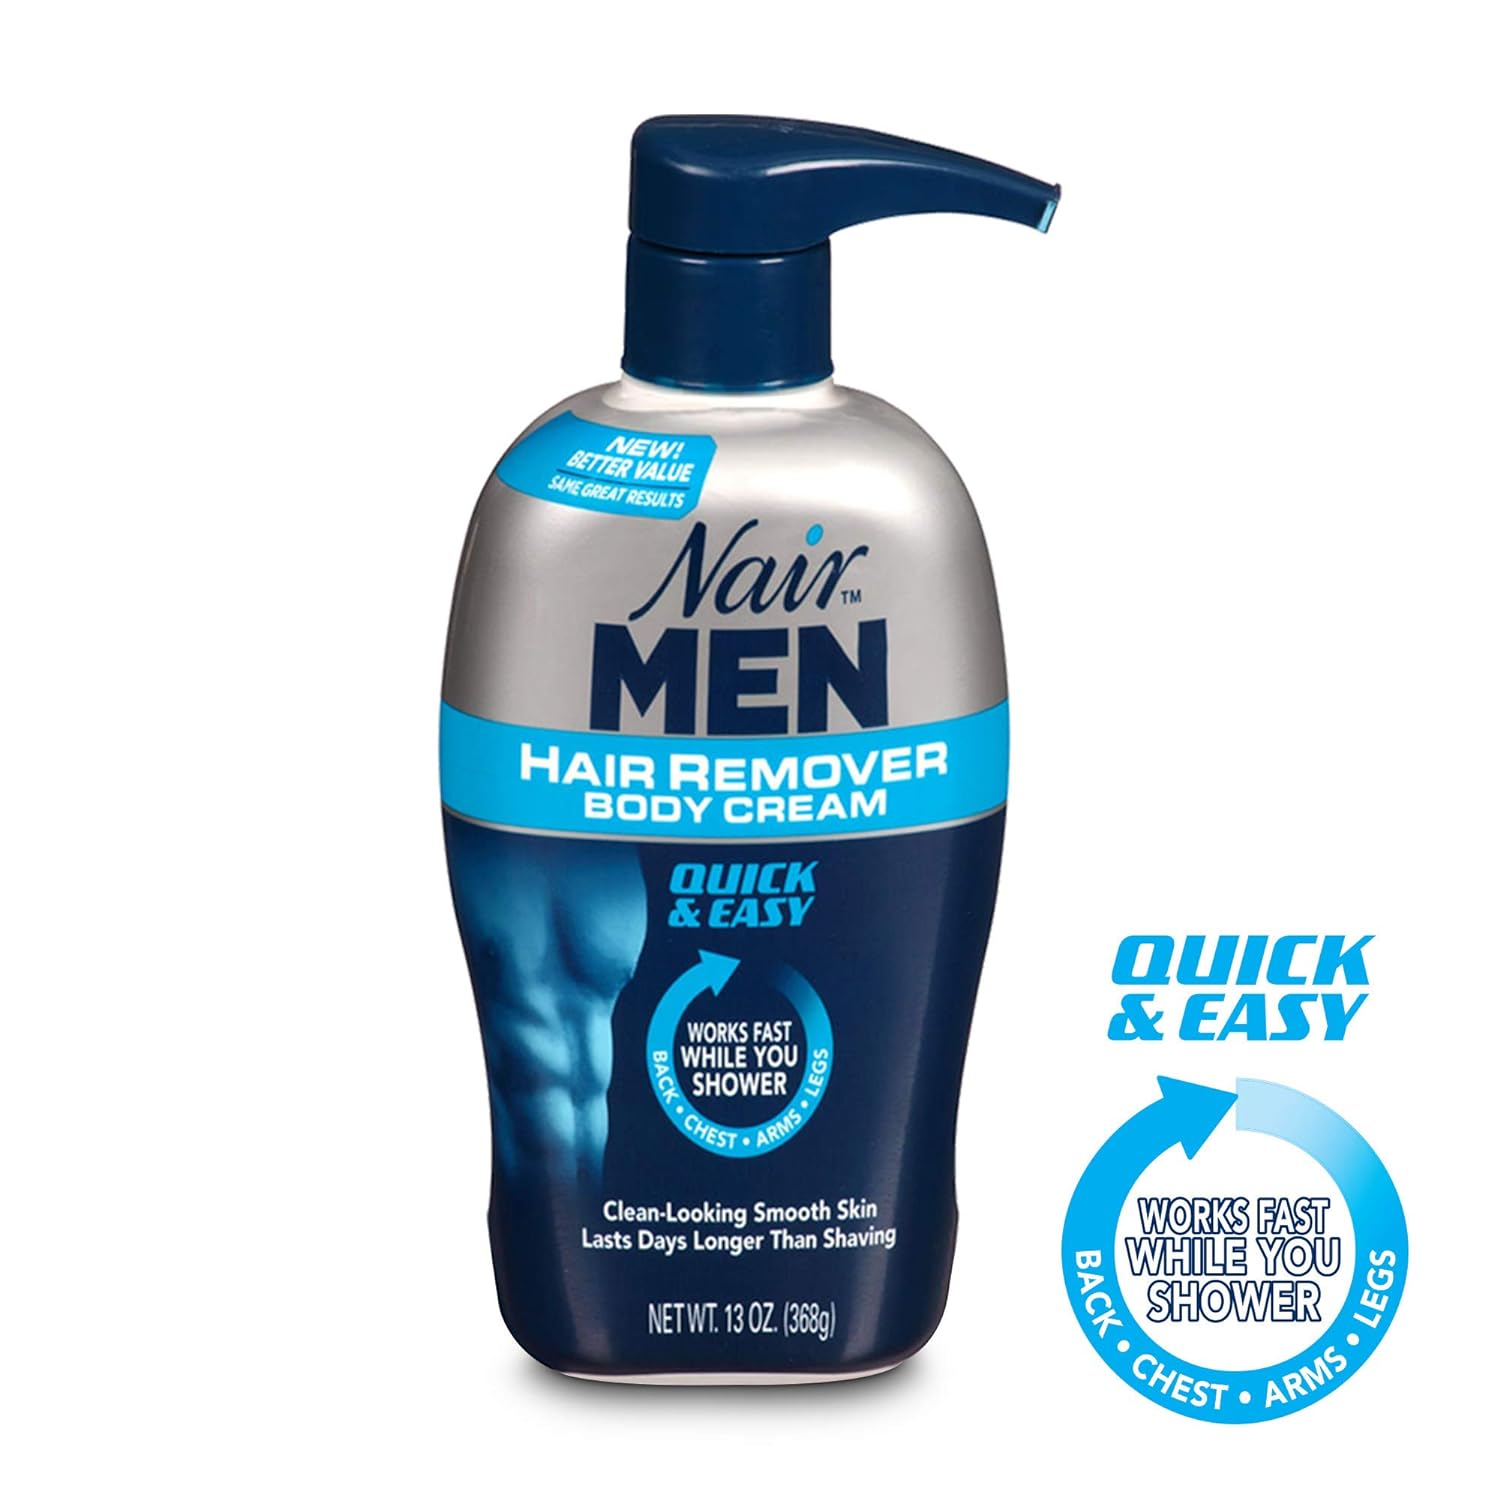 Nair Men Hair Remover Body Cream, Body Hair Remover for Men, 13 Oz Bottle : Beauty & Personal Care